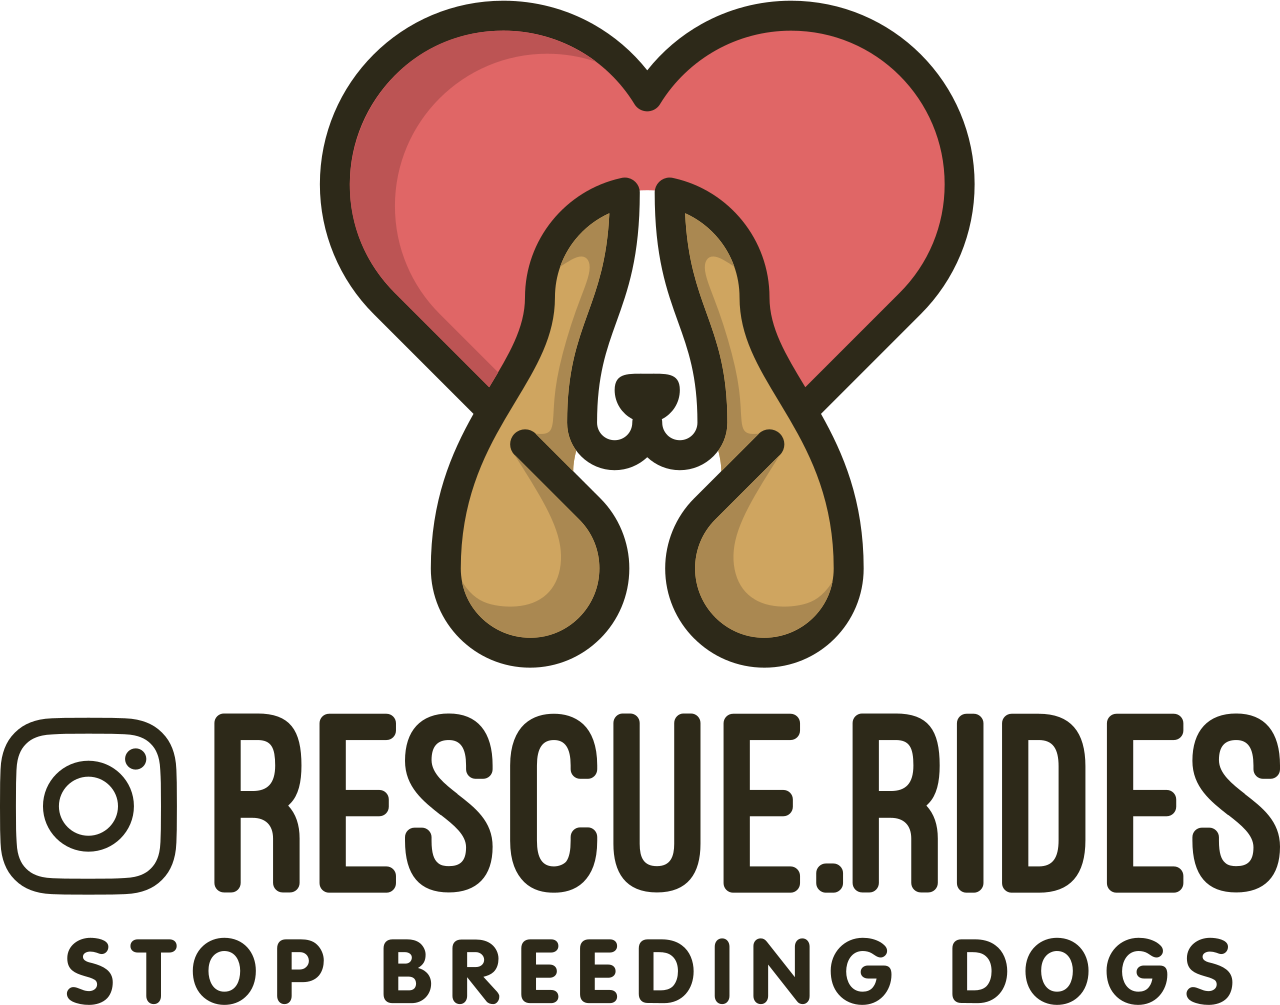 Rescue.Rides's web page